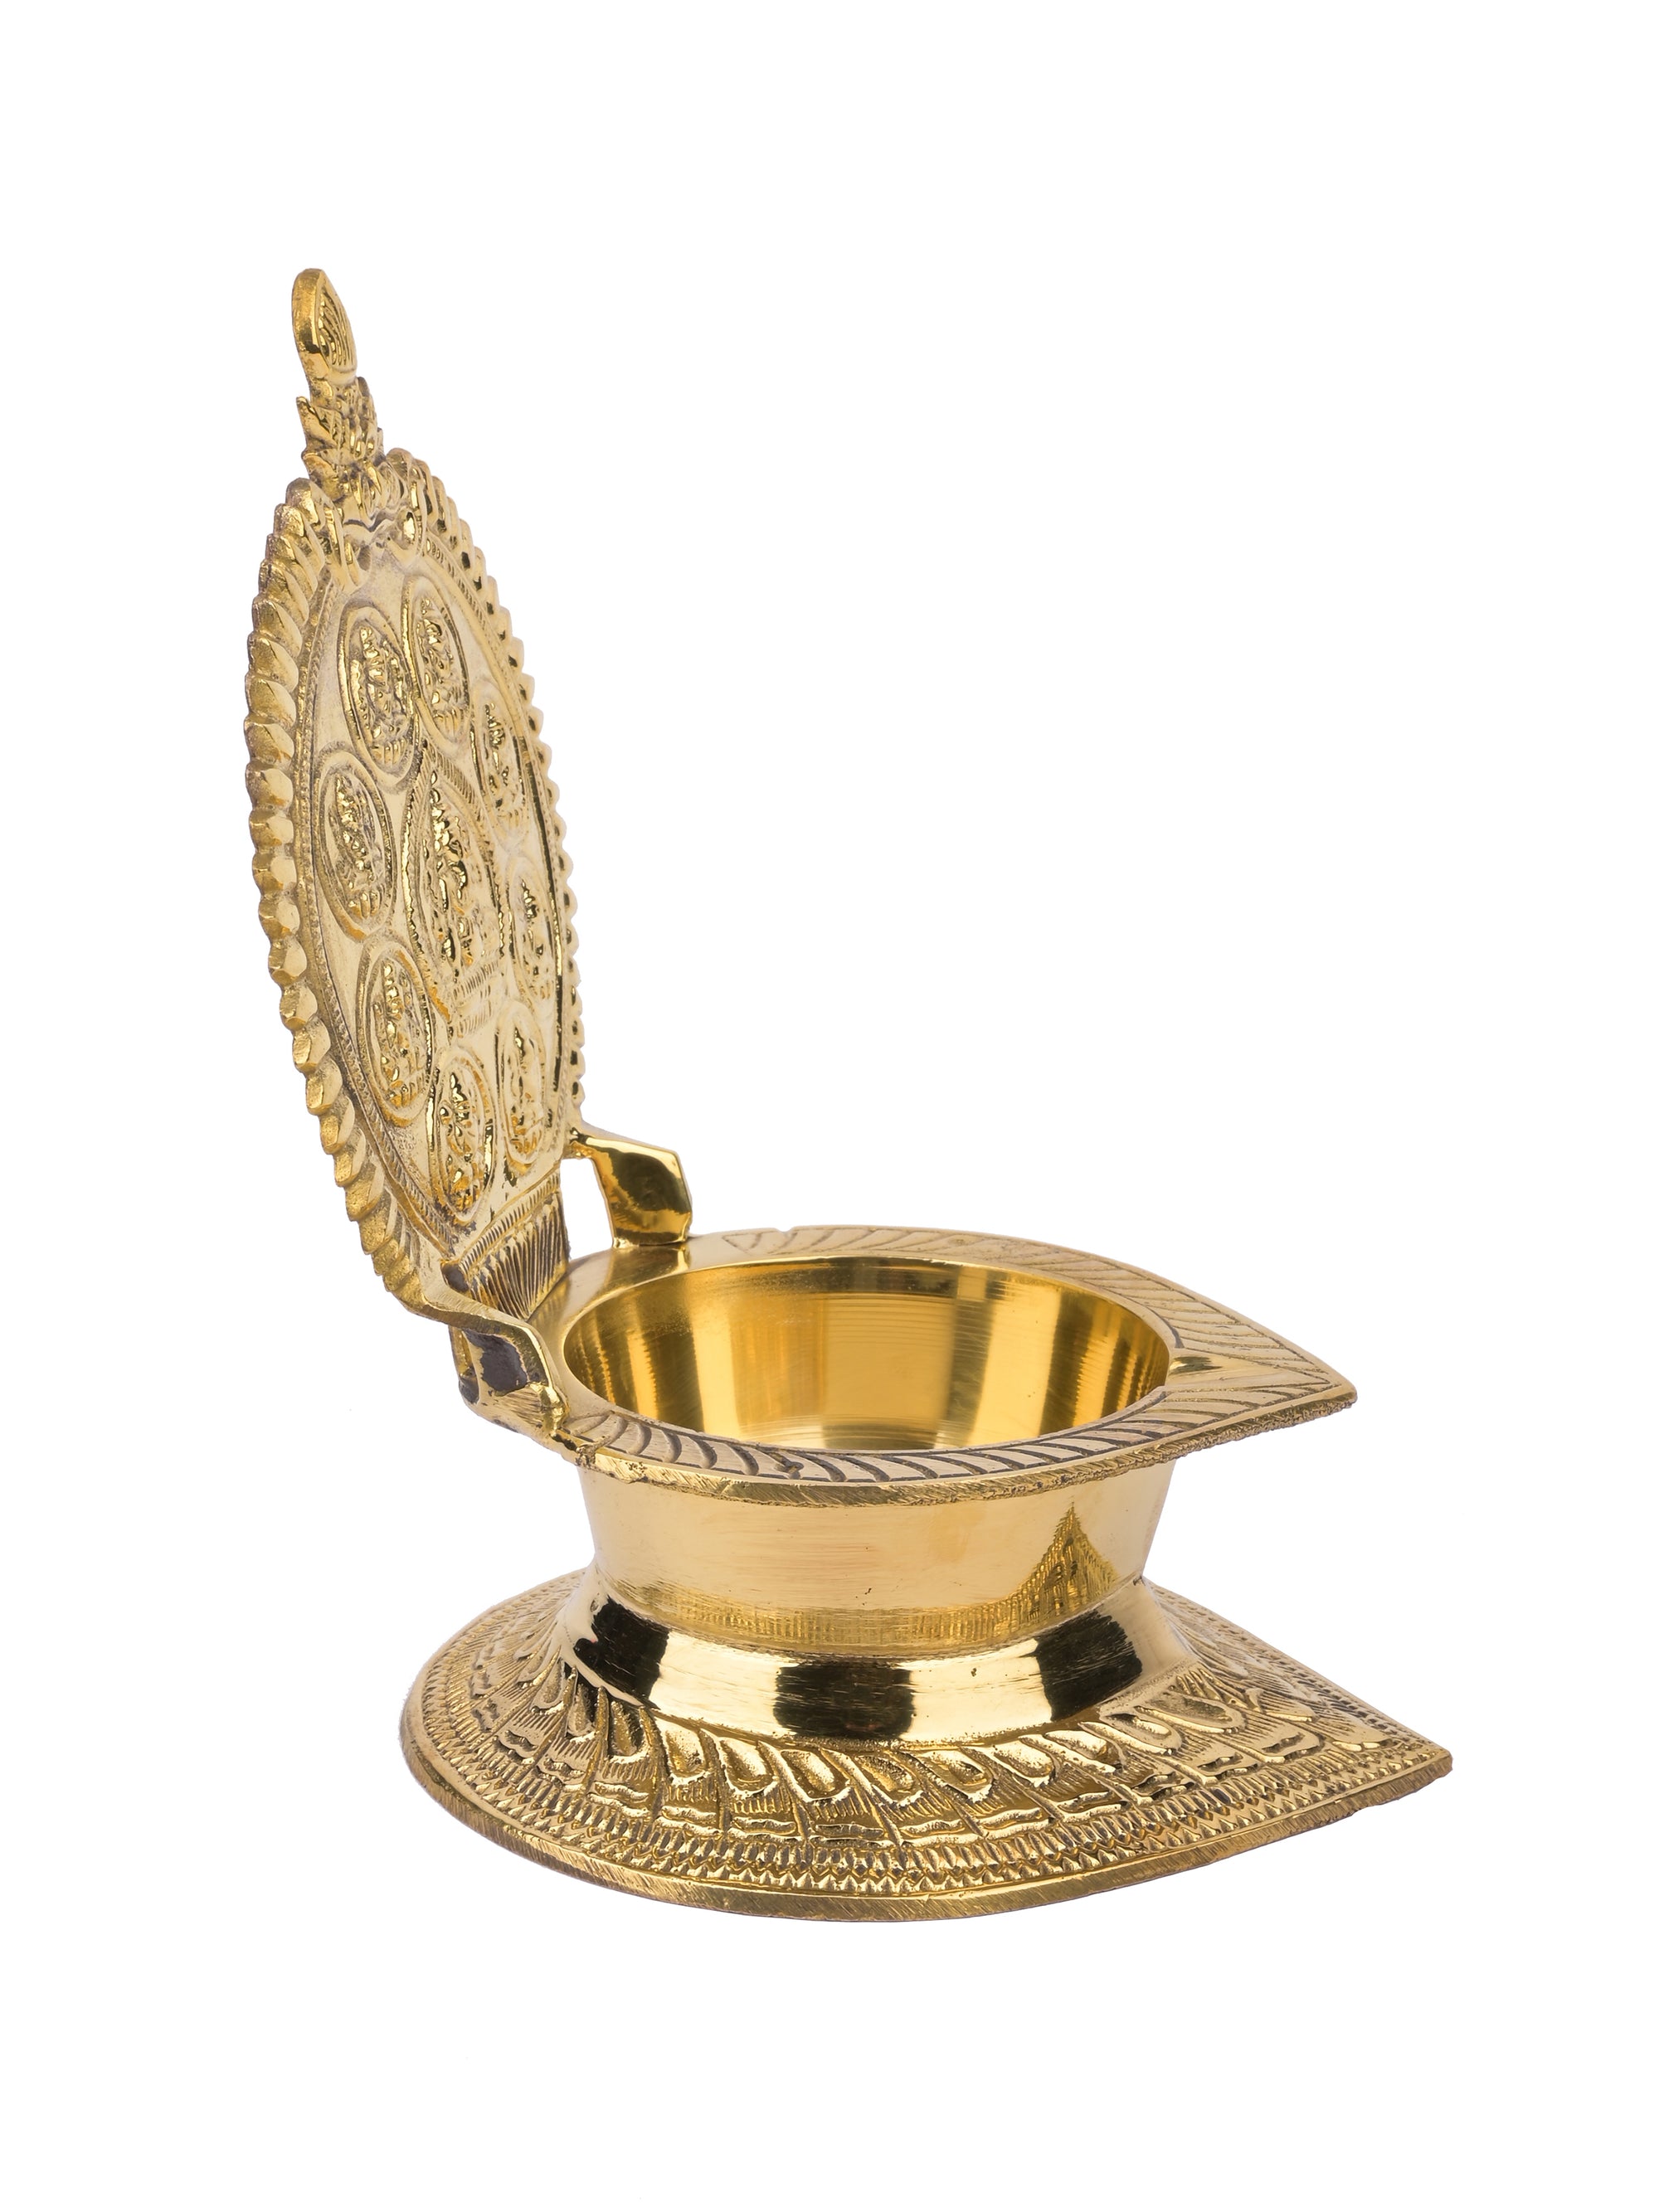 Brass Ashta lakshmi single petal Lamp / Diya - 7 inches height - The Heritage Artifacts